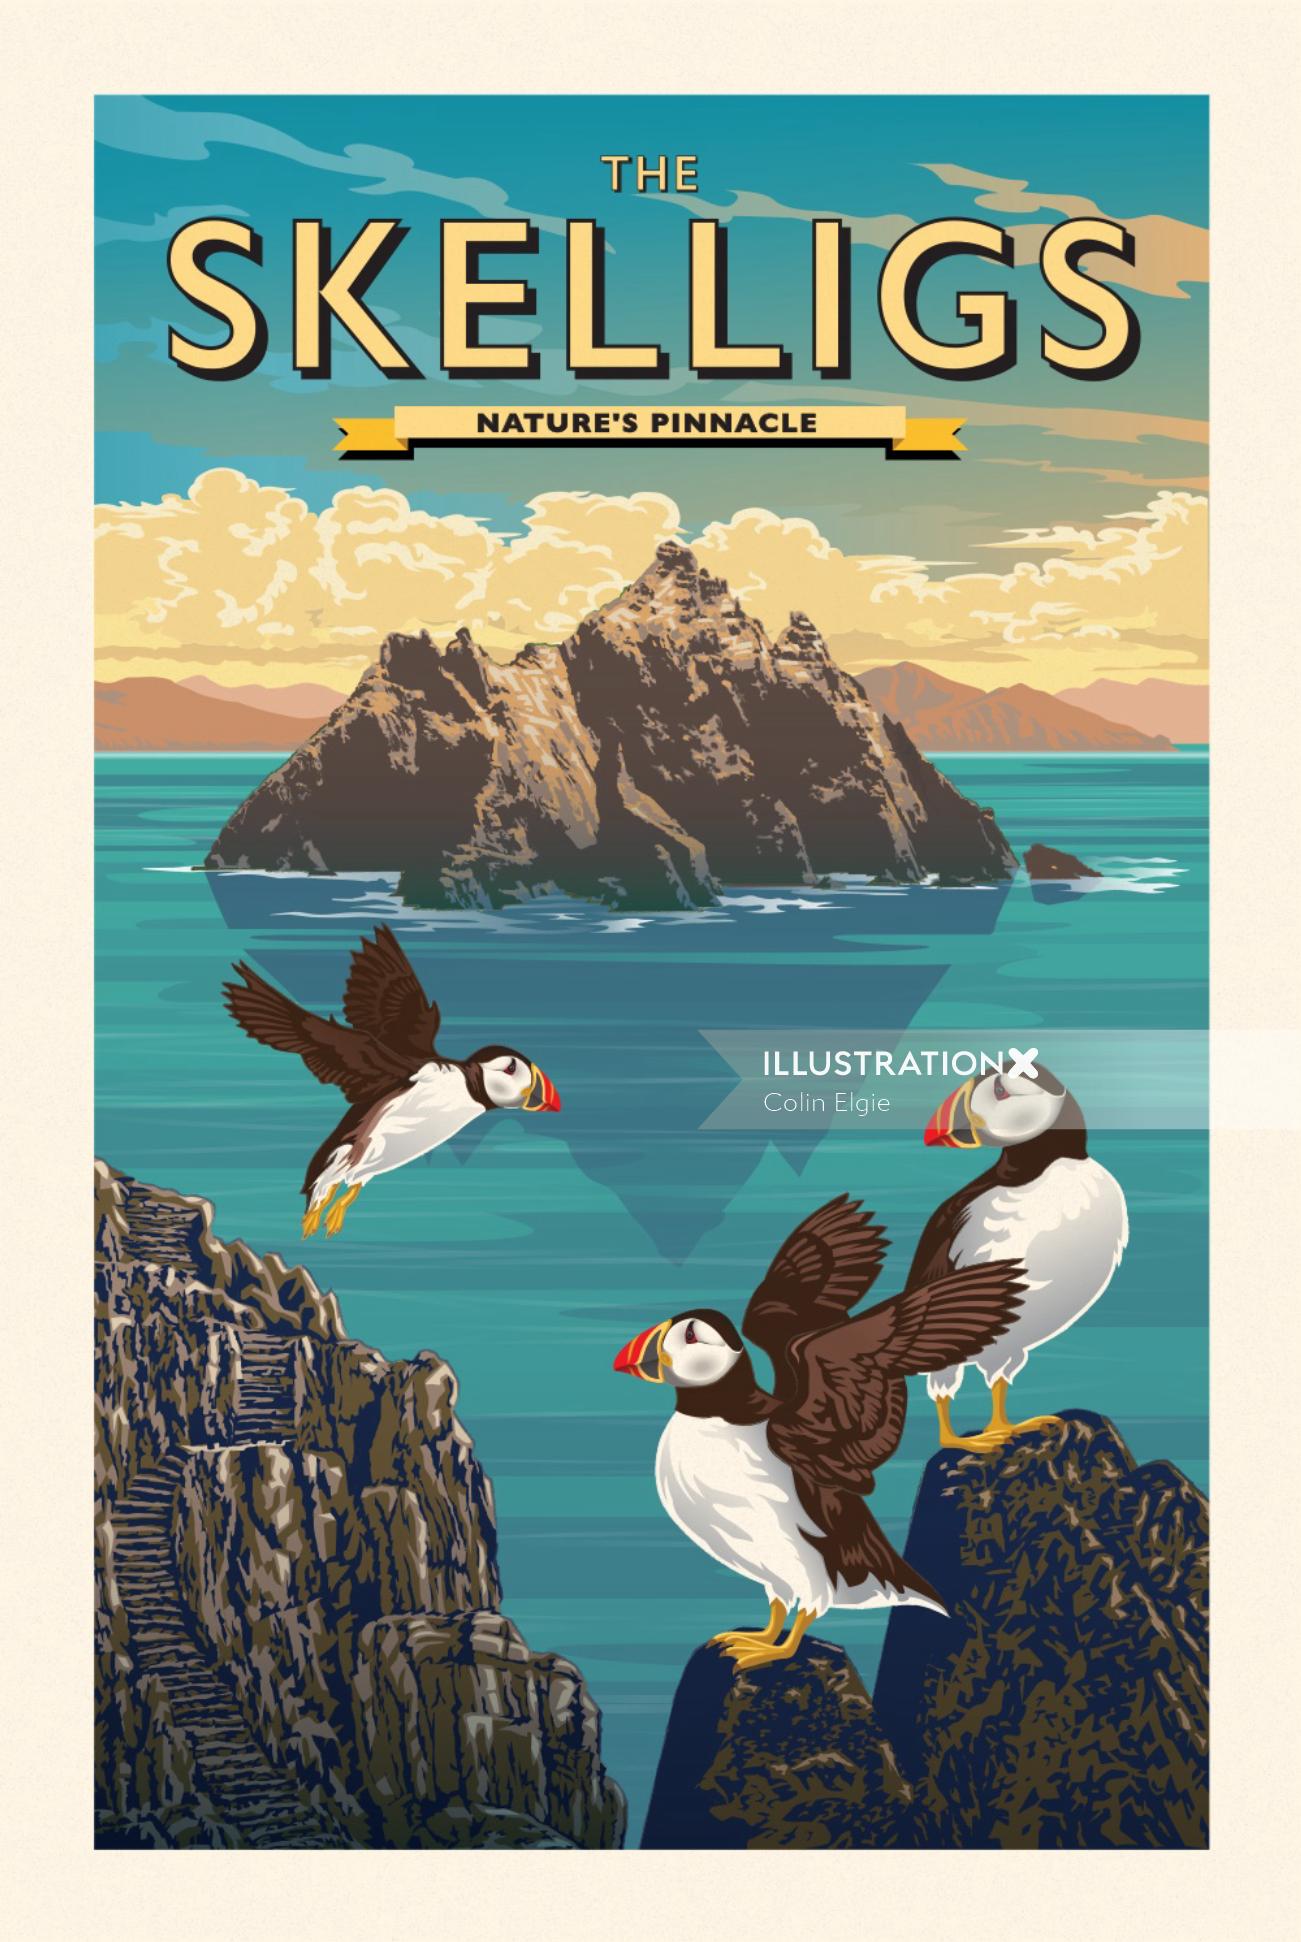 Poster Illustration for the Skellig Islands in Ireland